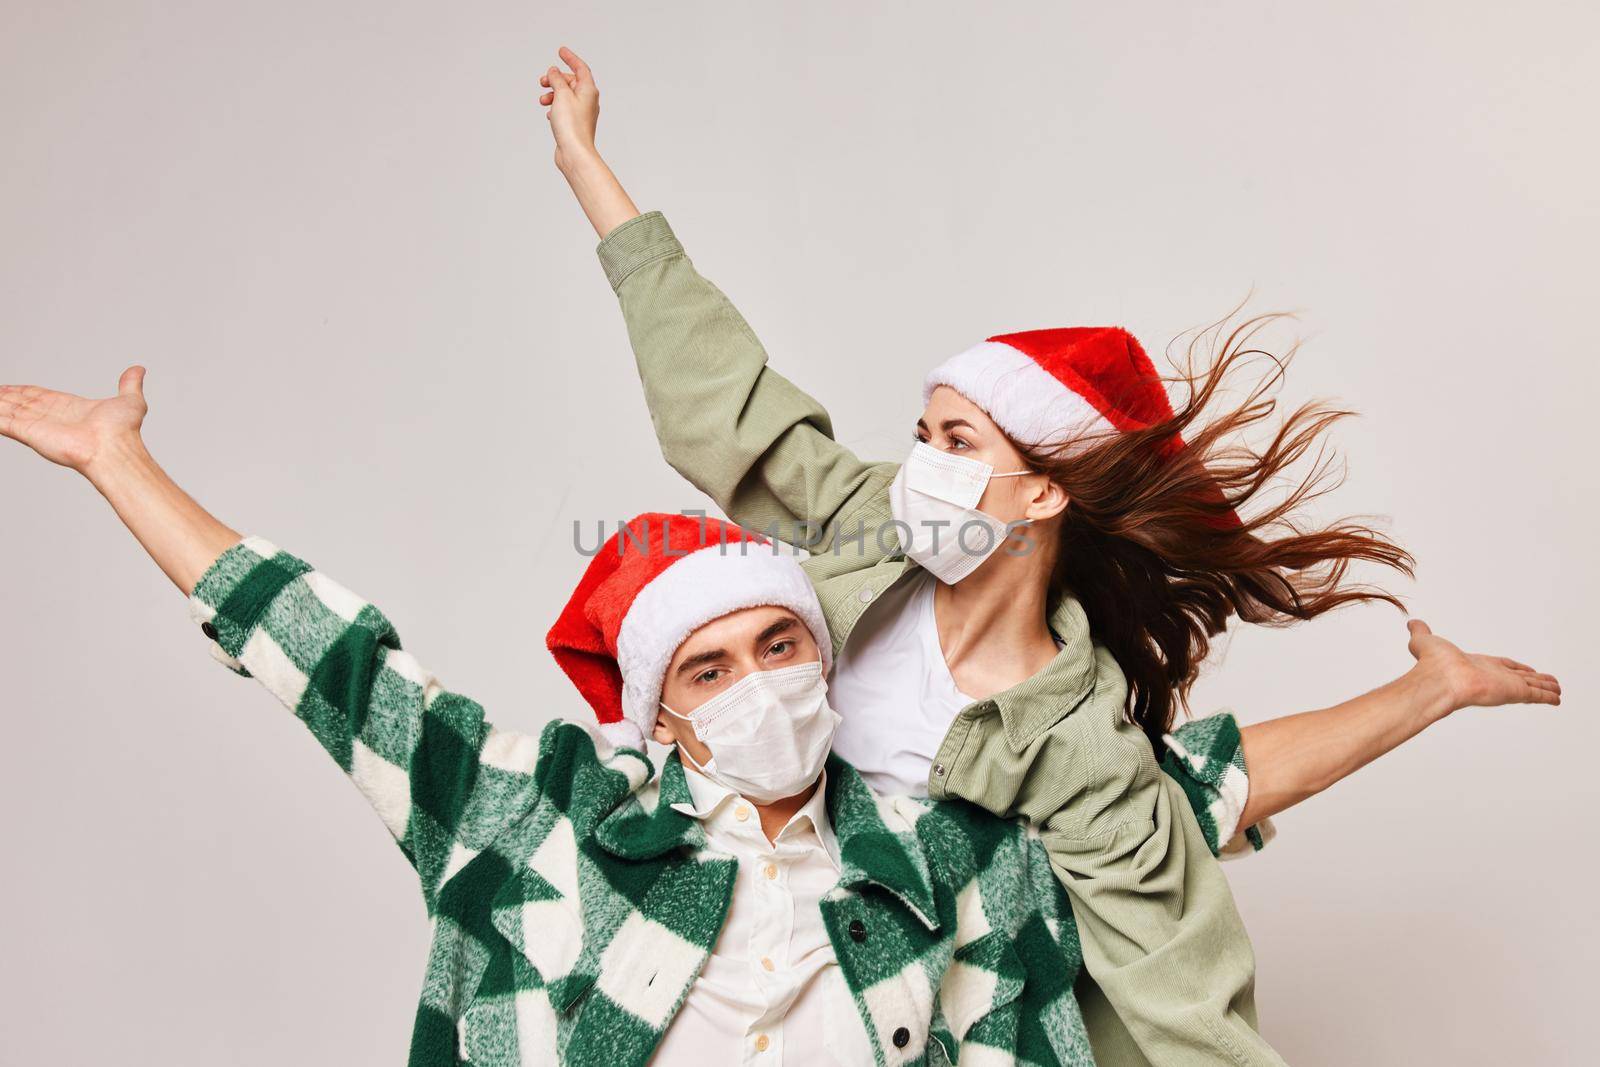 Christmas mood man and woman fun holiday hat medical mask by SHOTPRIME